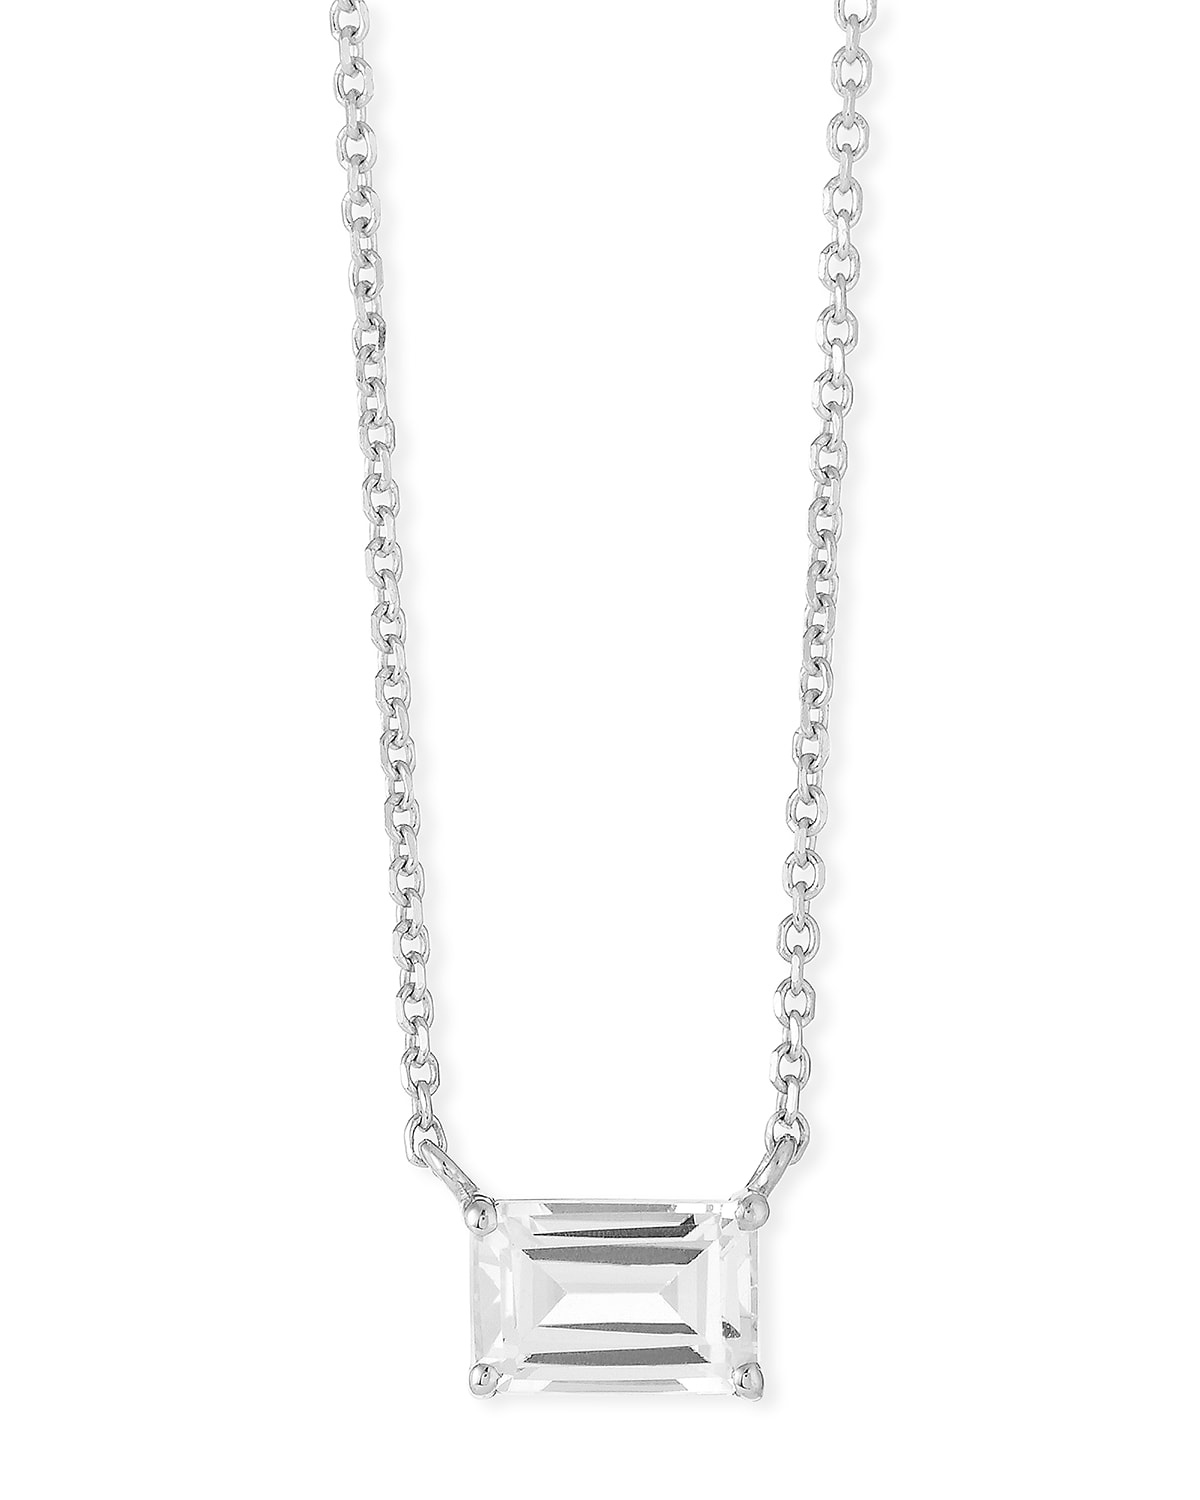 KALAN by Suzanne Kalan Amalfi 14K White Gold Emerald-Cut Necklace